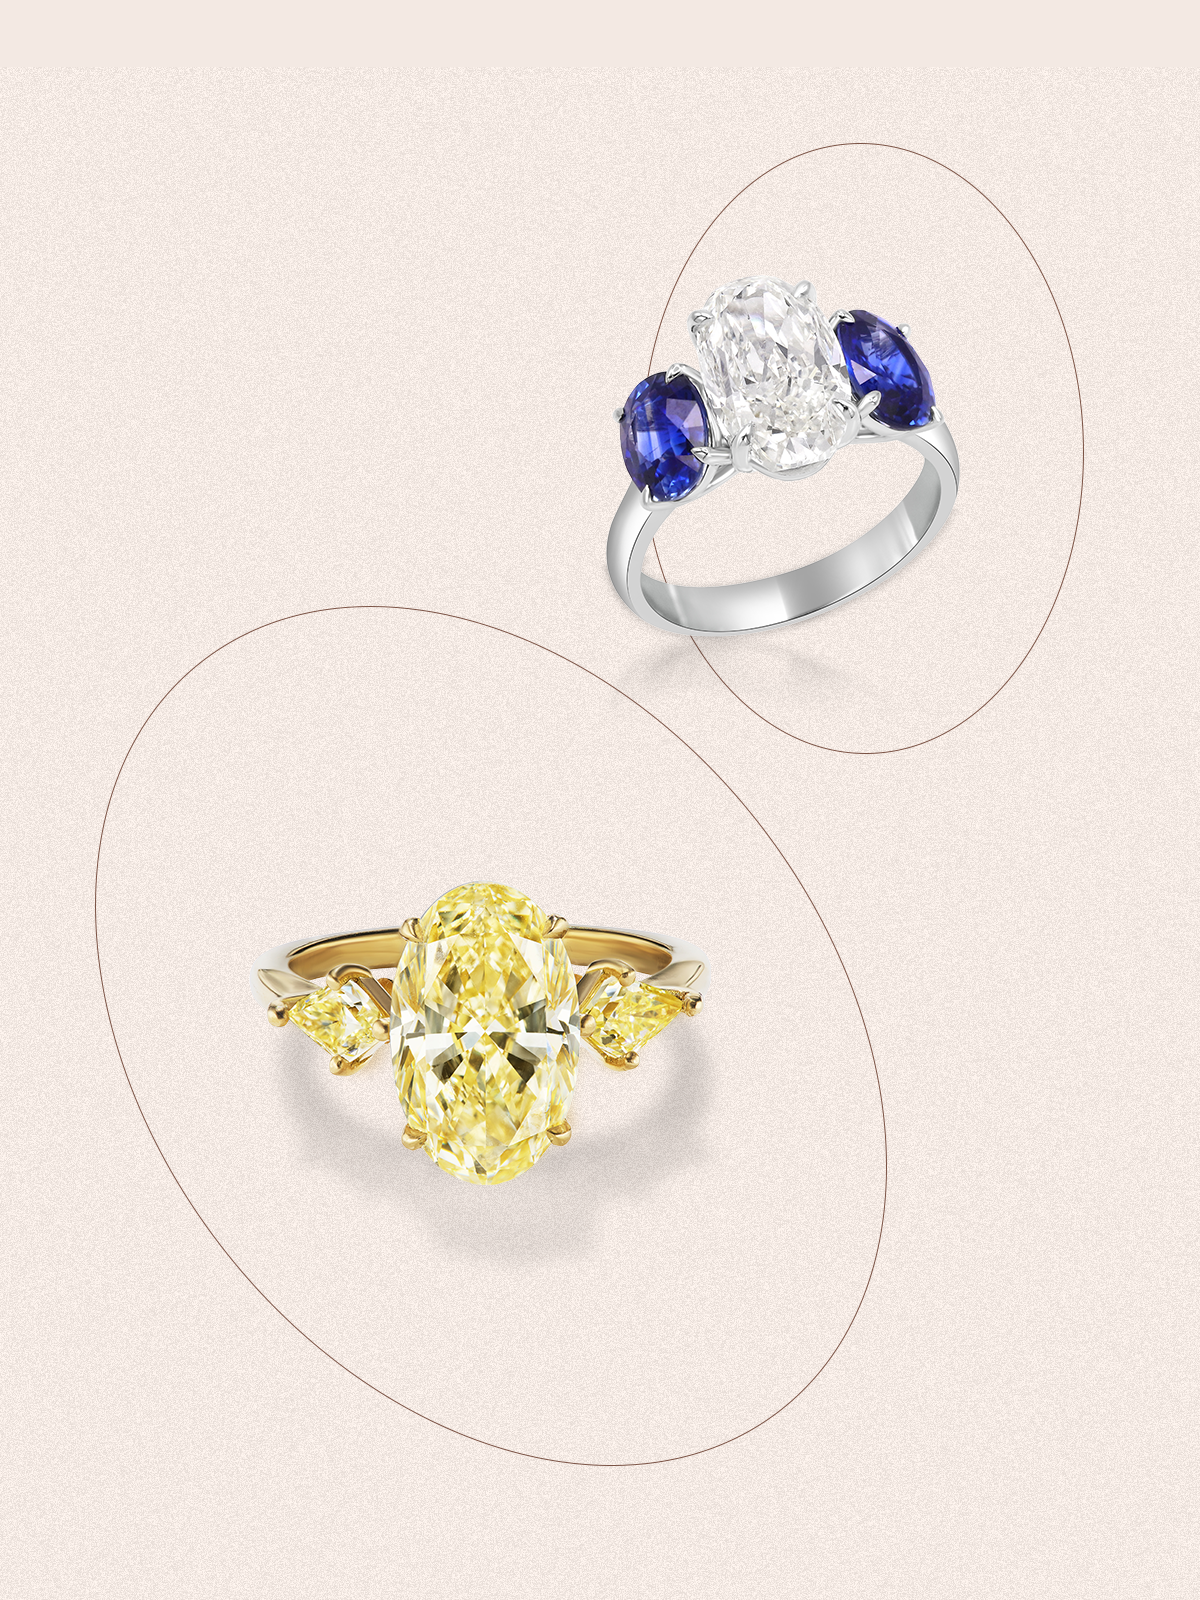 Elegant oval cut diamond engagement ring